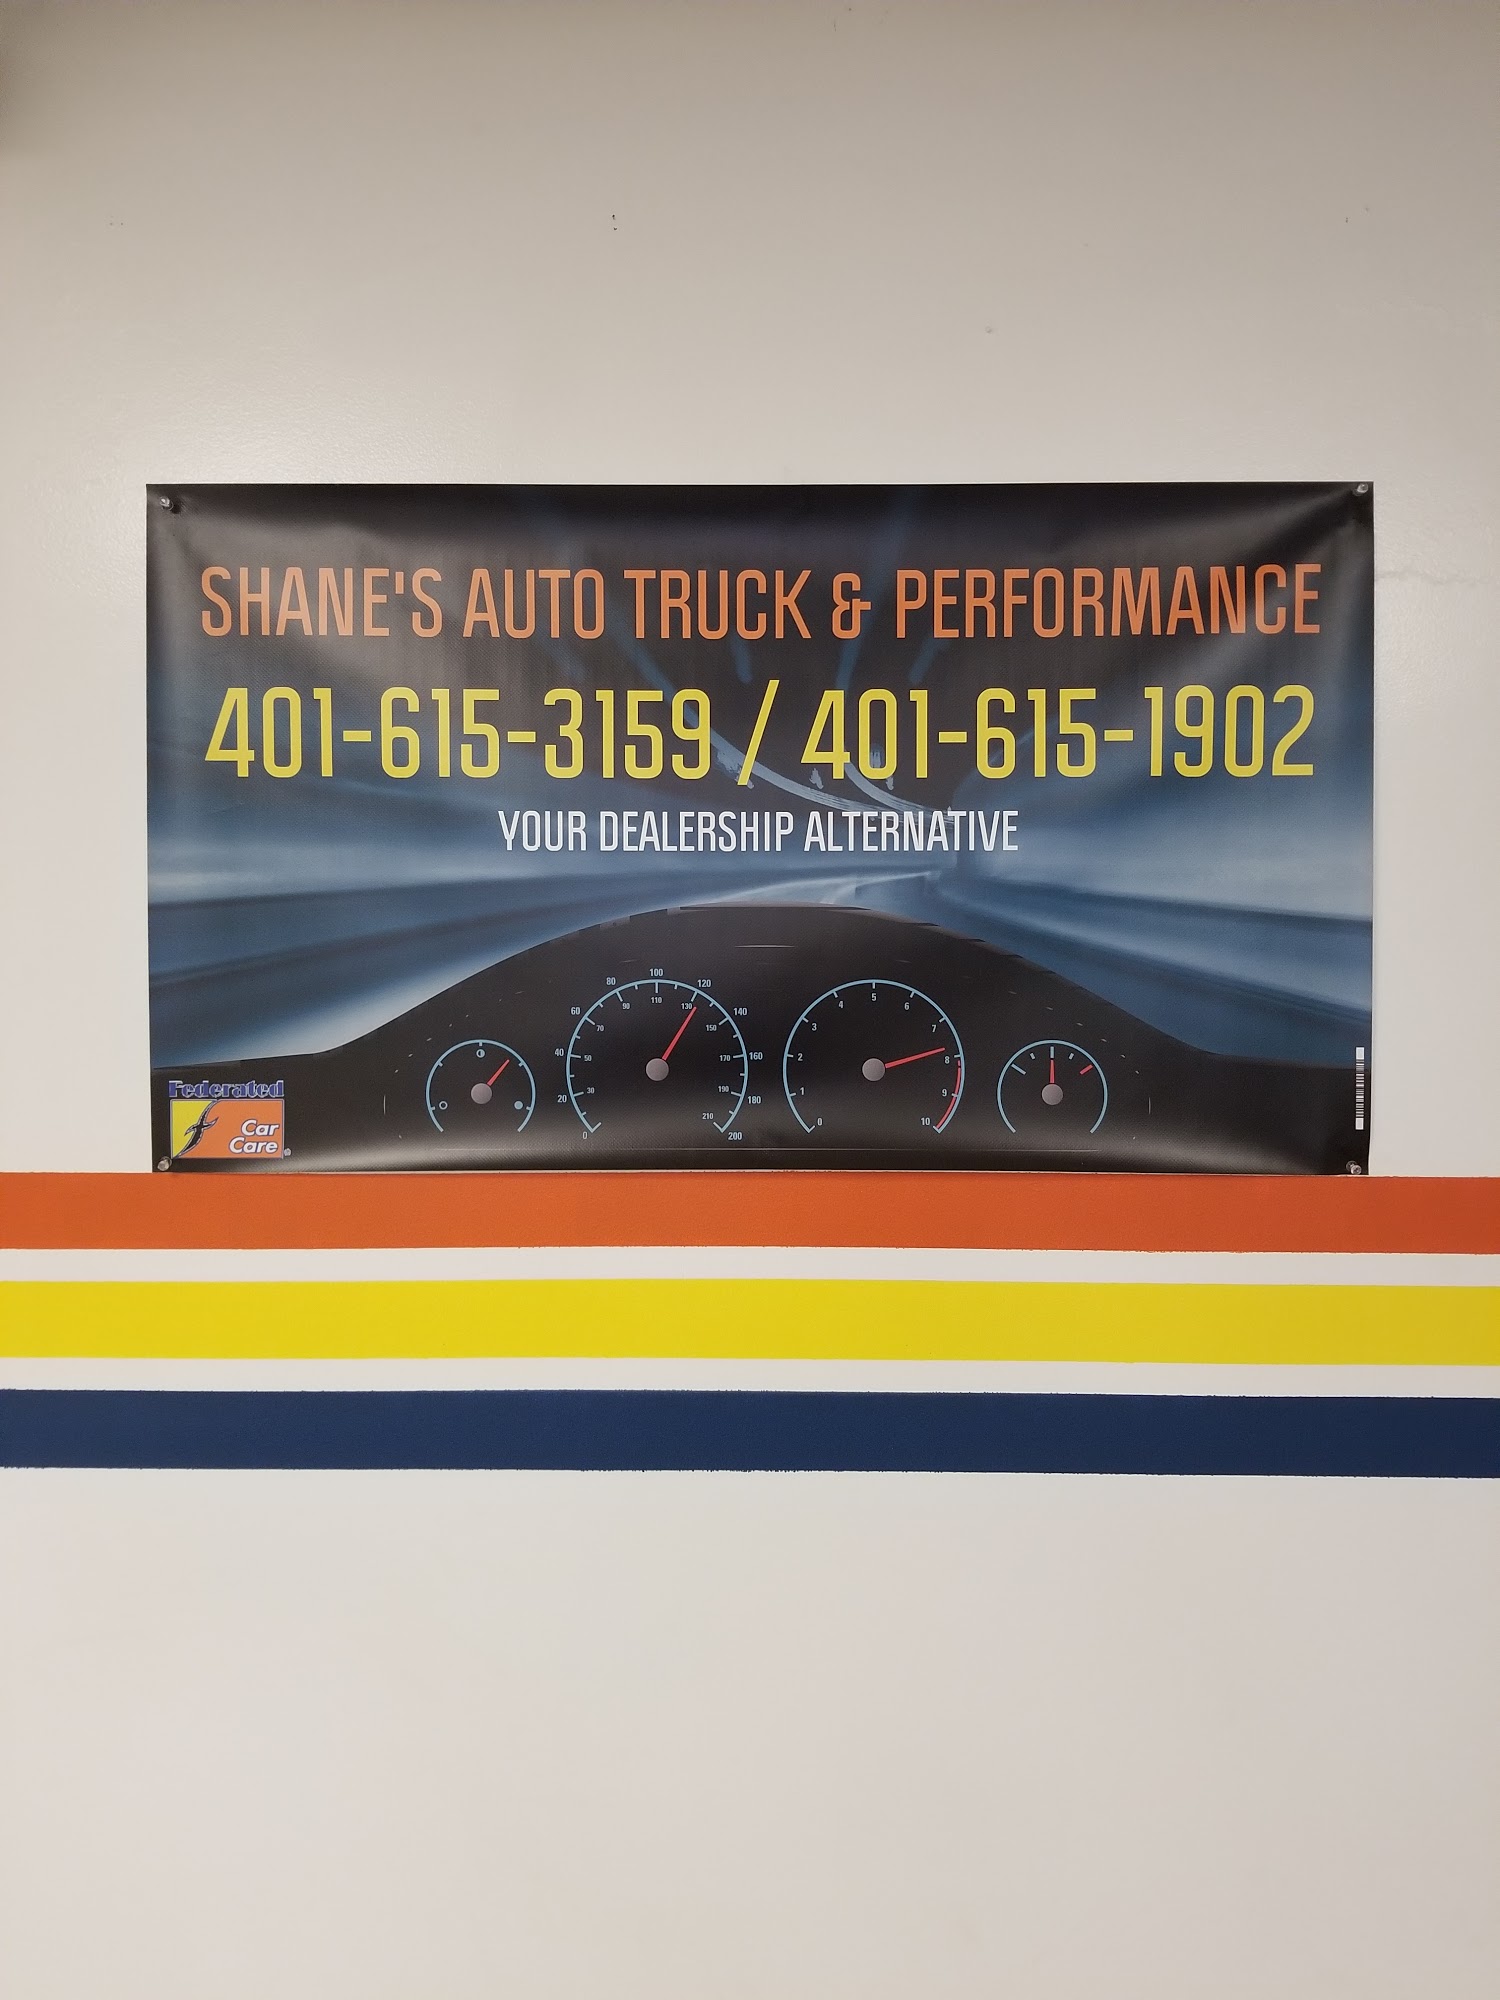 Shane's Auto Truck & Performance